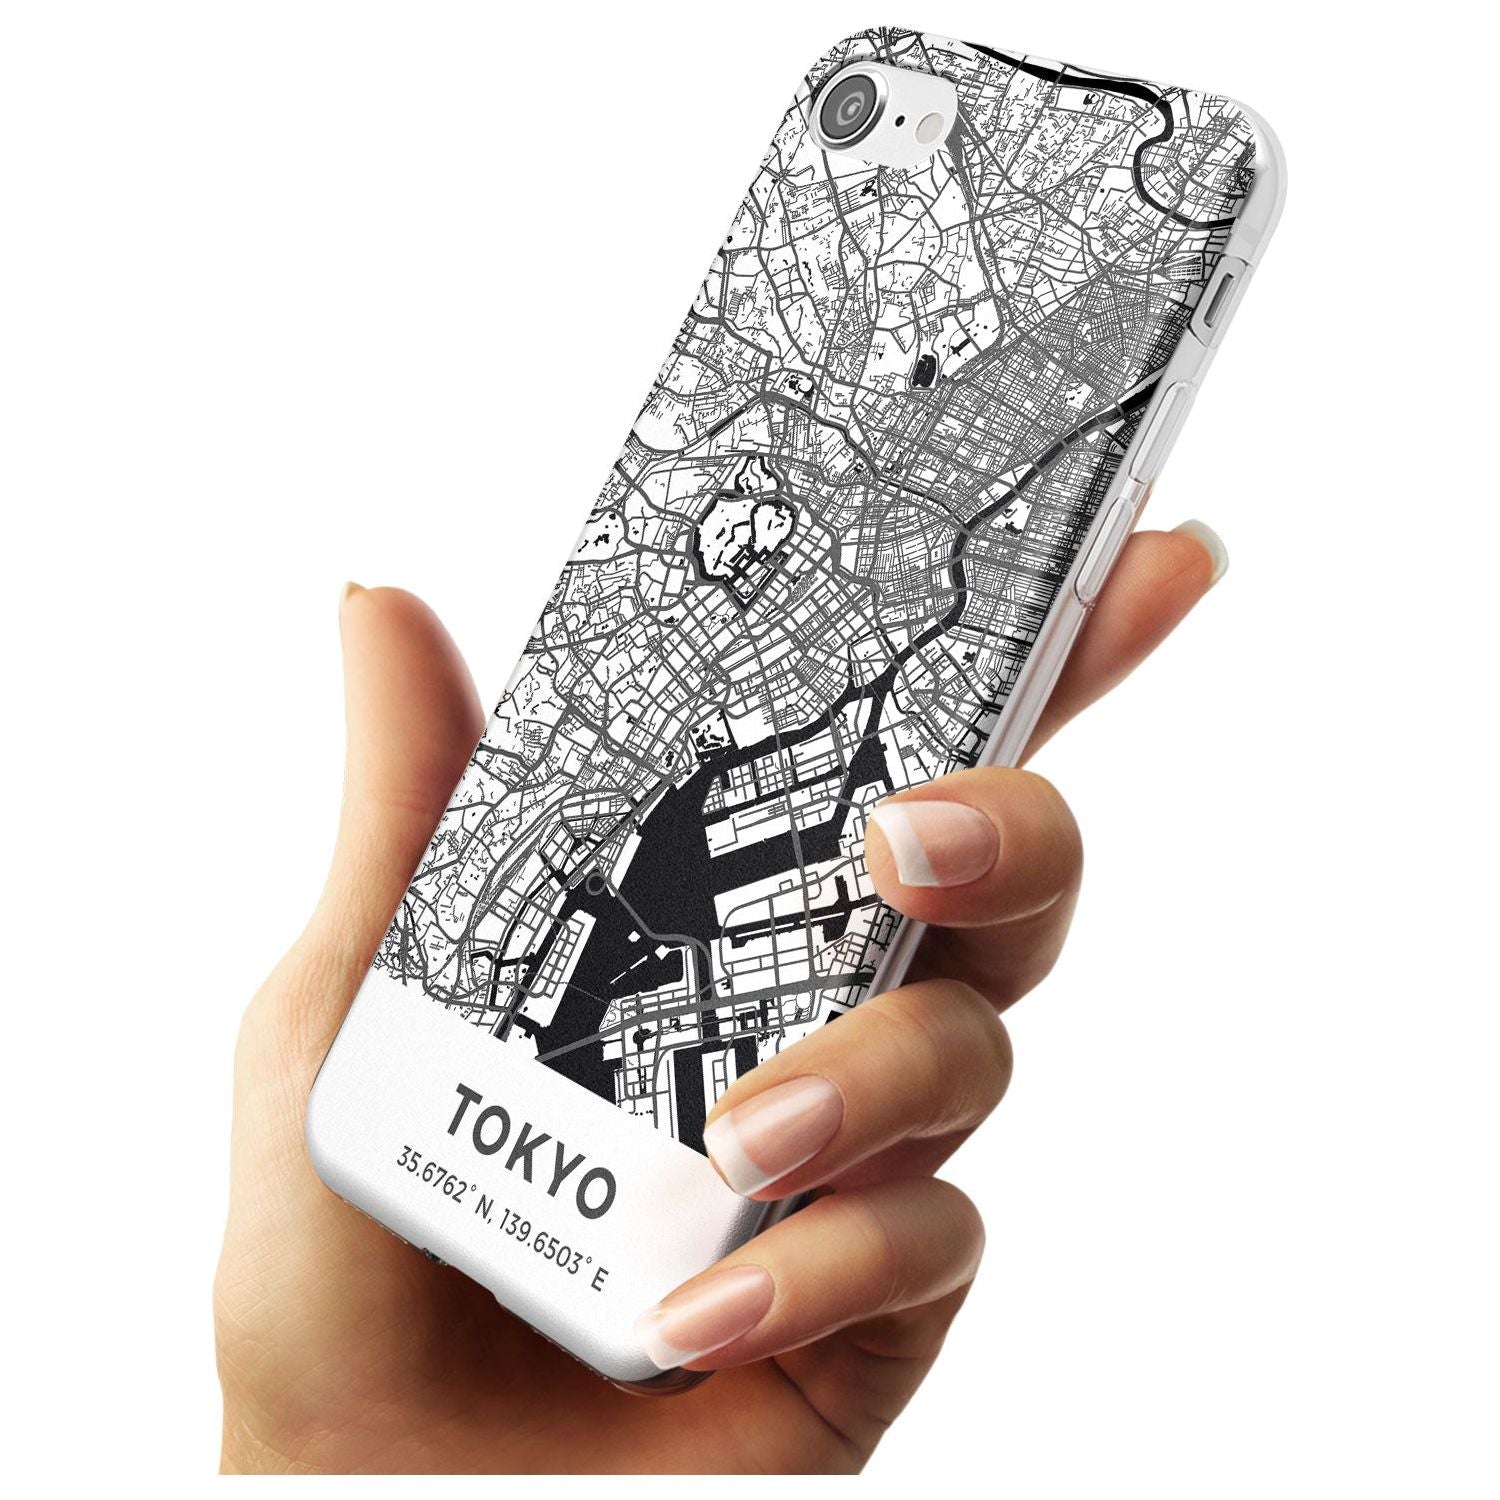 Map of Tokyo, Japan Slim TPU Phone Case for iPhone SE 8 7 Plus